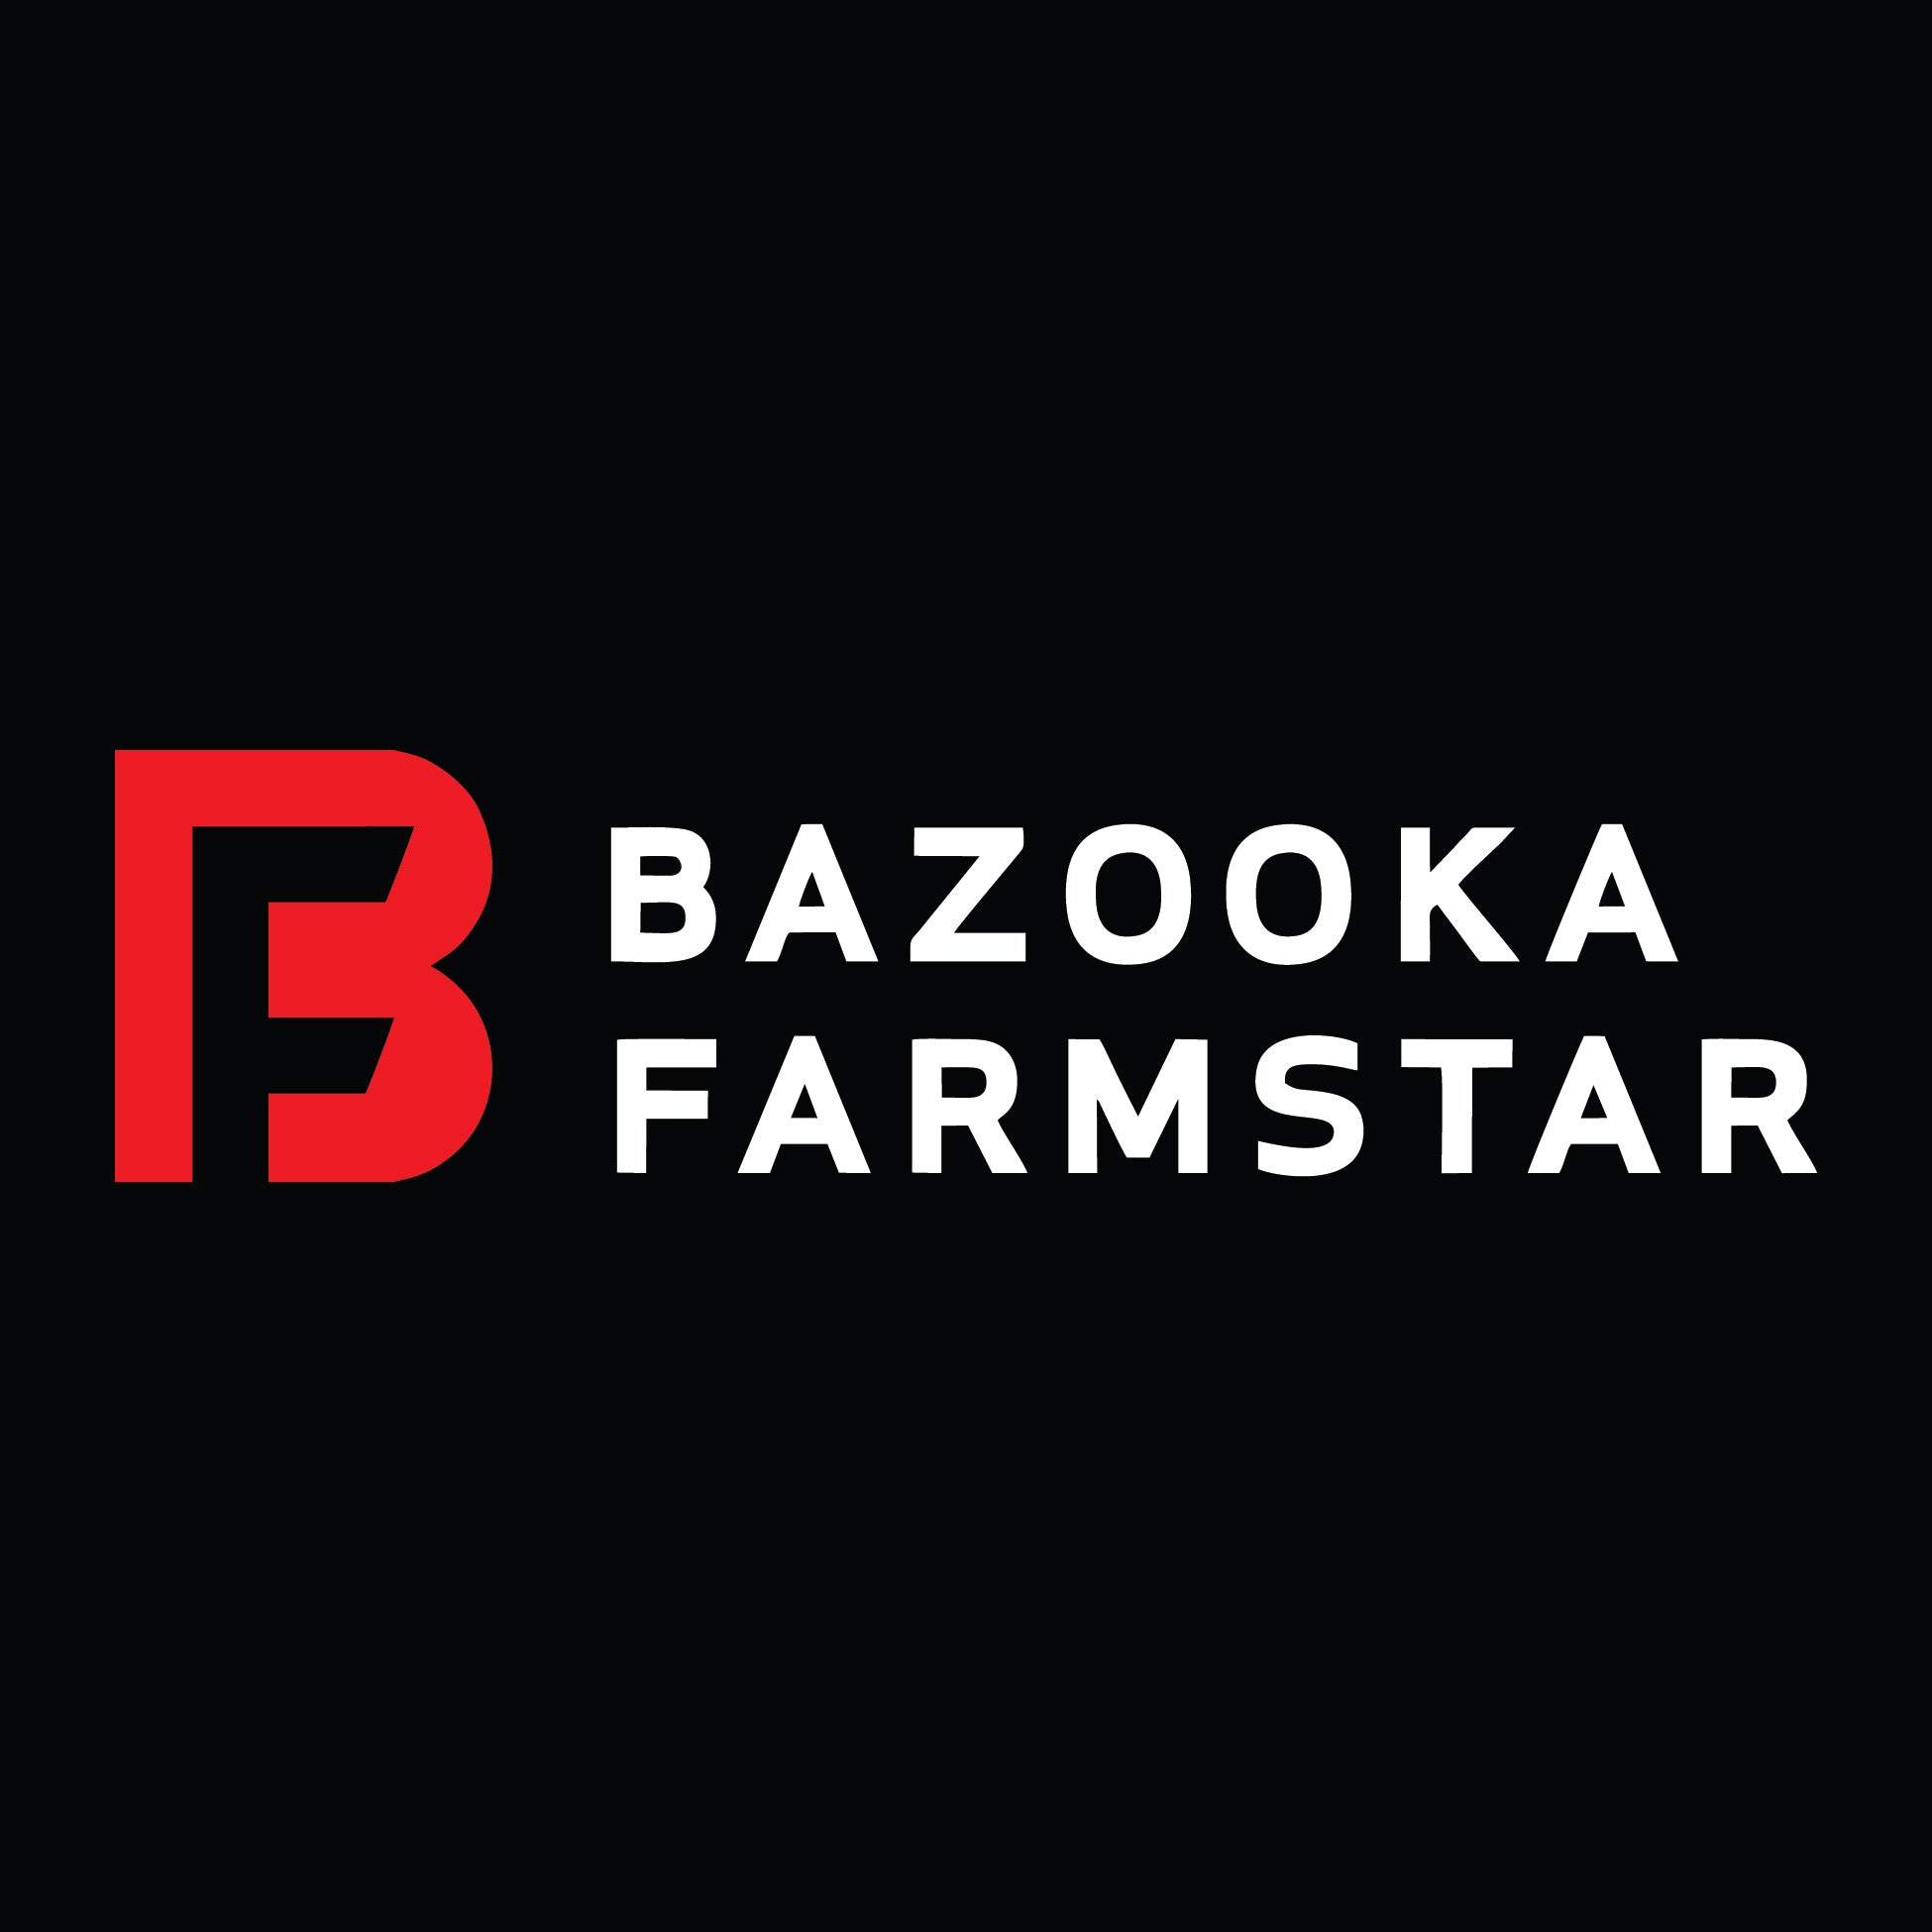 Bazooka Farmstar